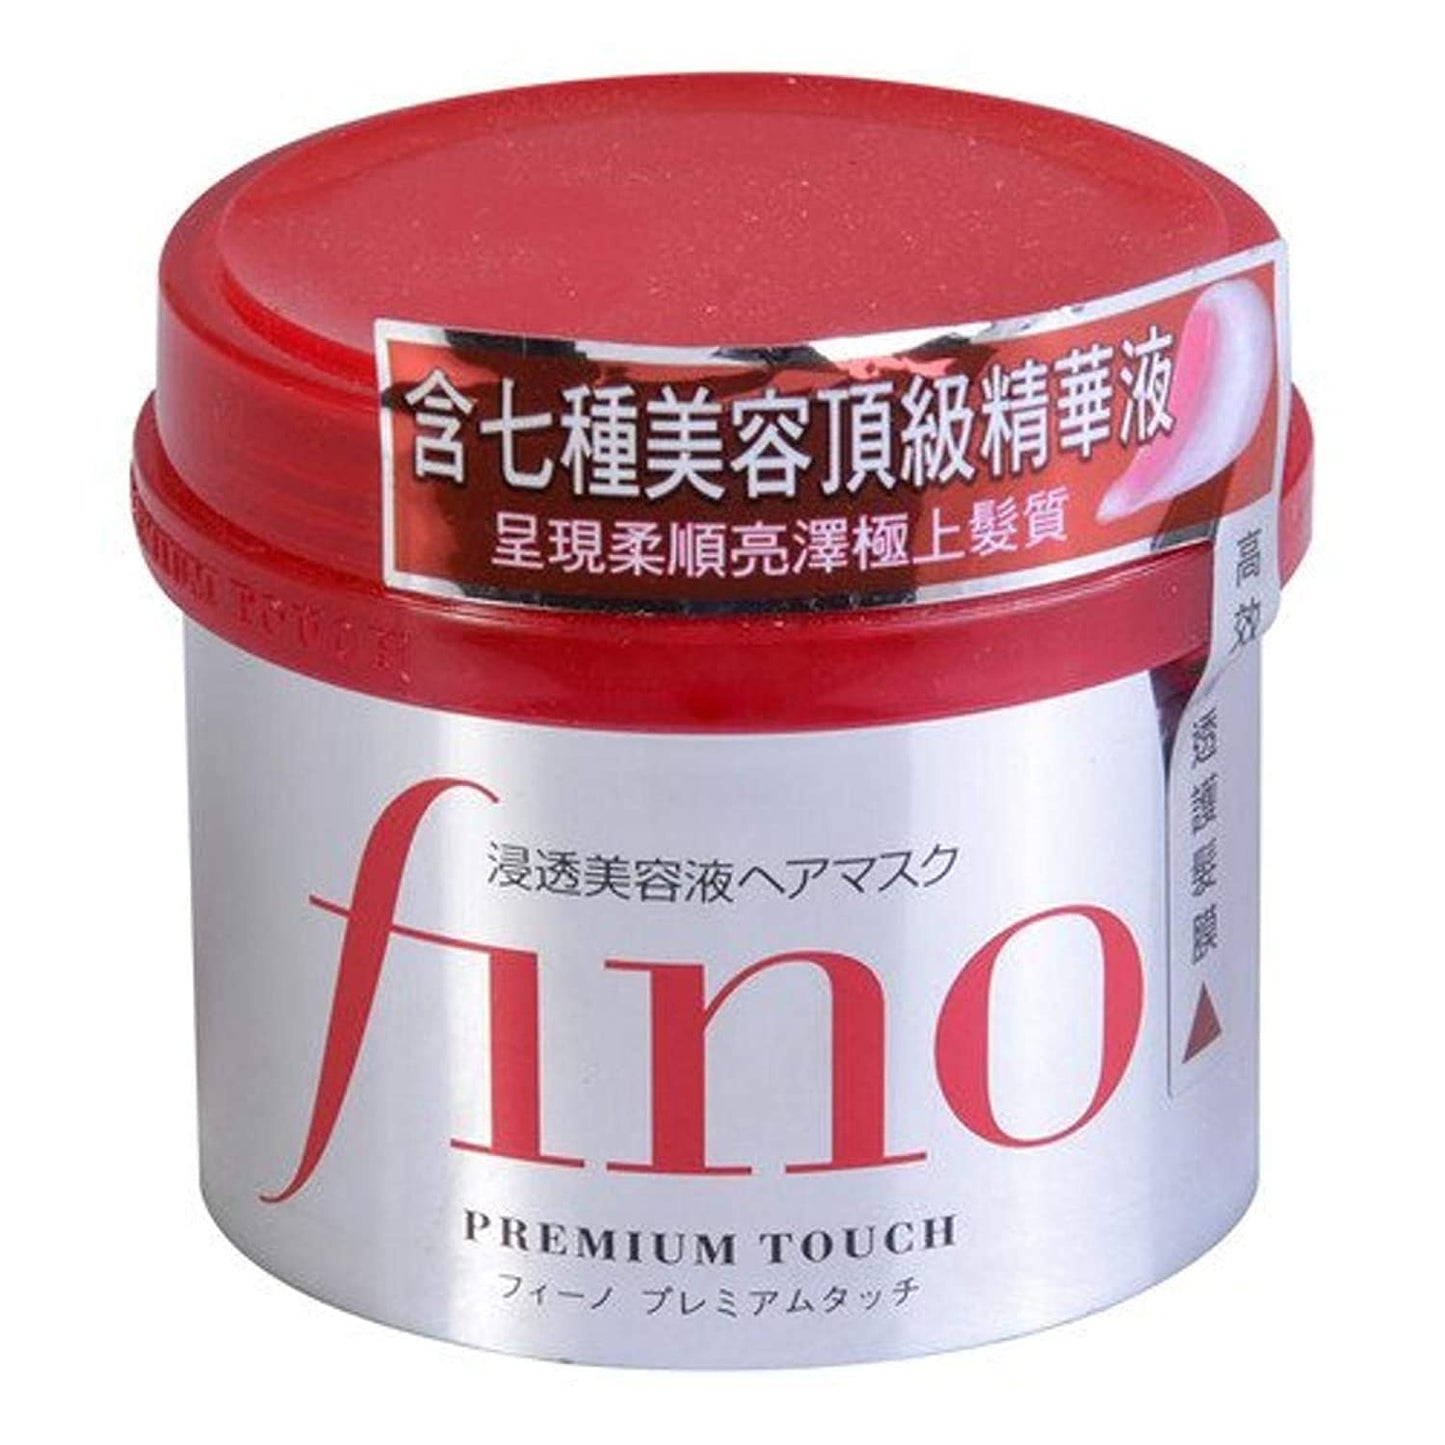 Shiseido Fino Premium Touch Essence Mask